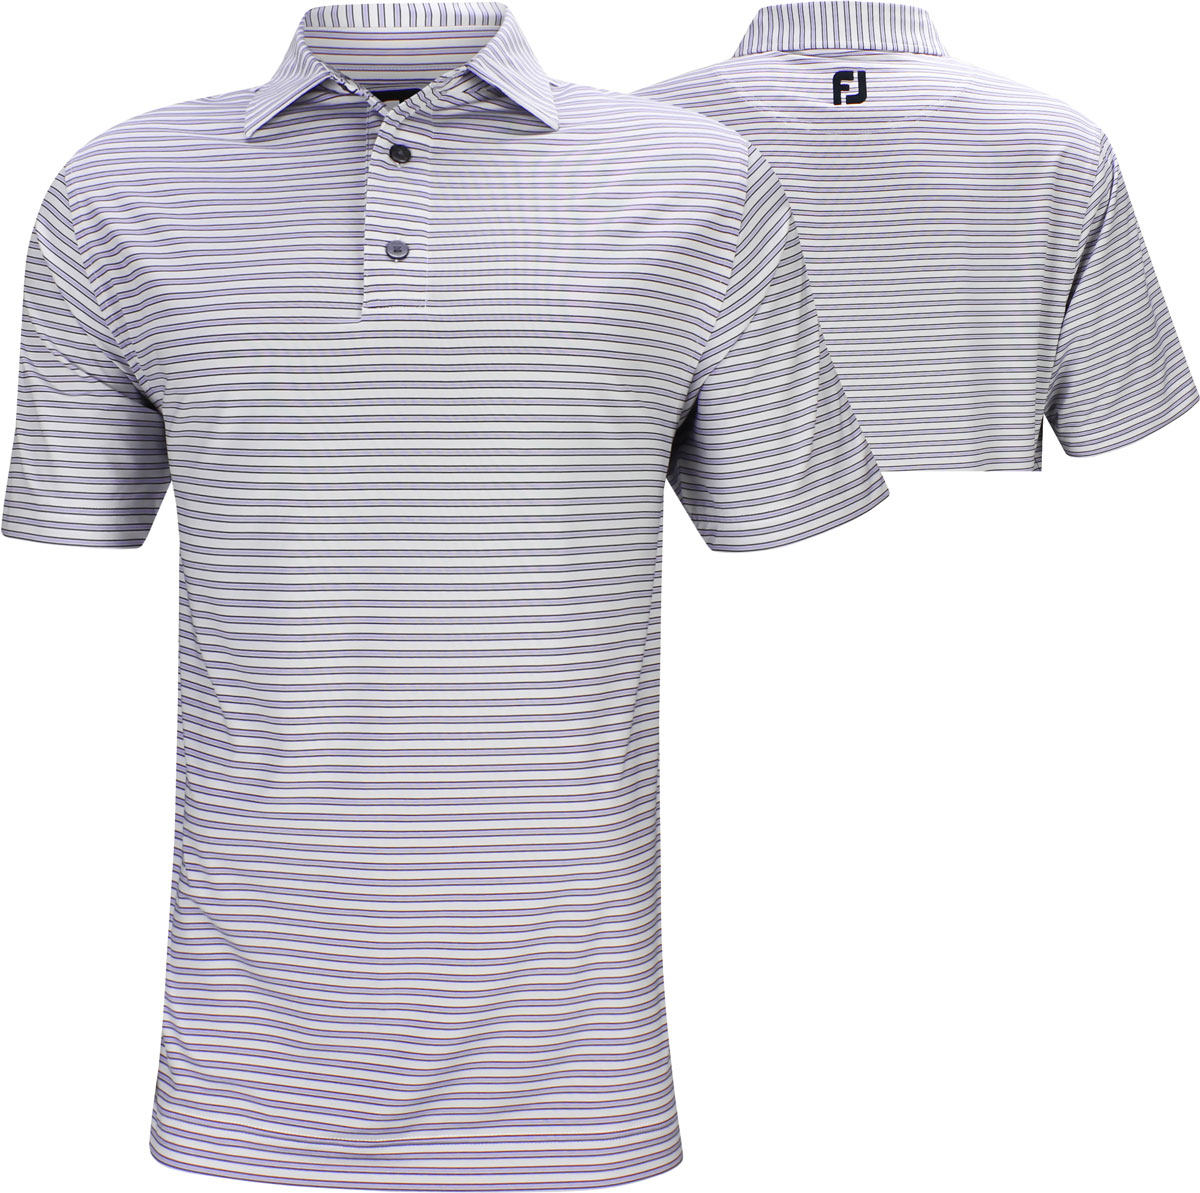 FootJoy ProDry Performance Stretch Lisle Pinstripe Golf Shirts